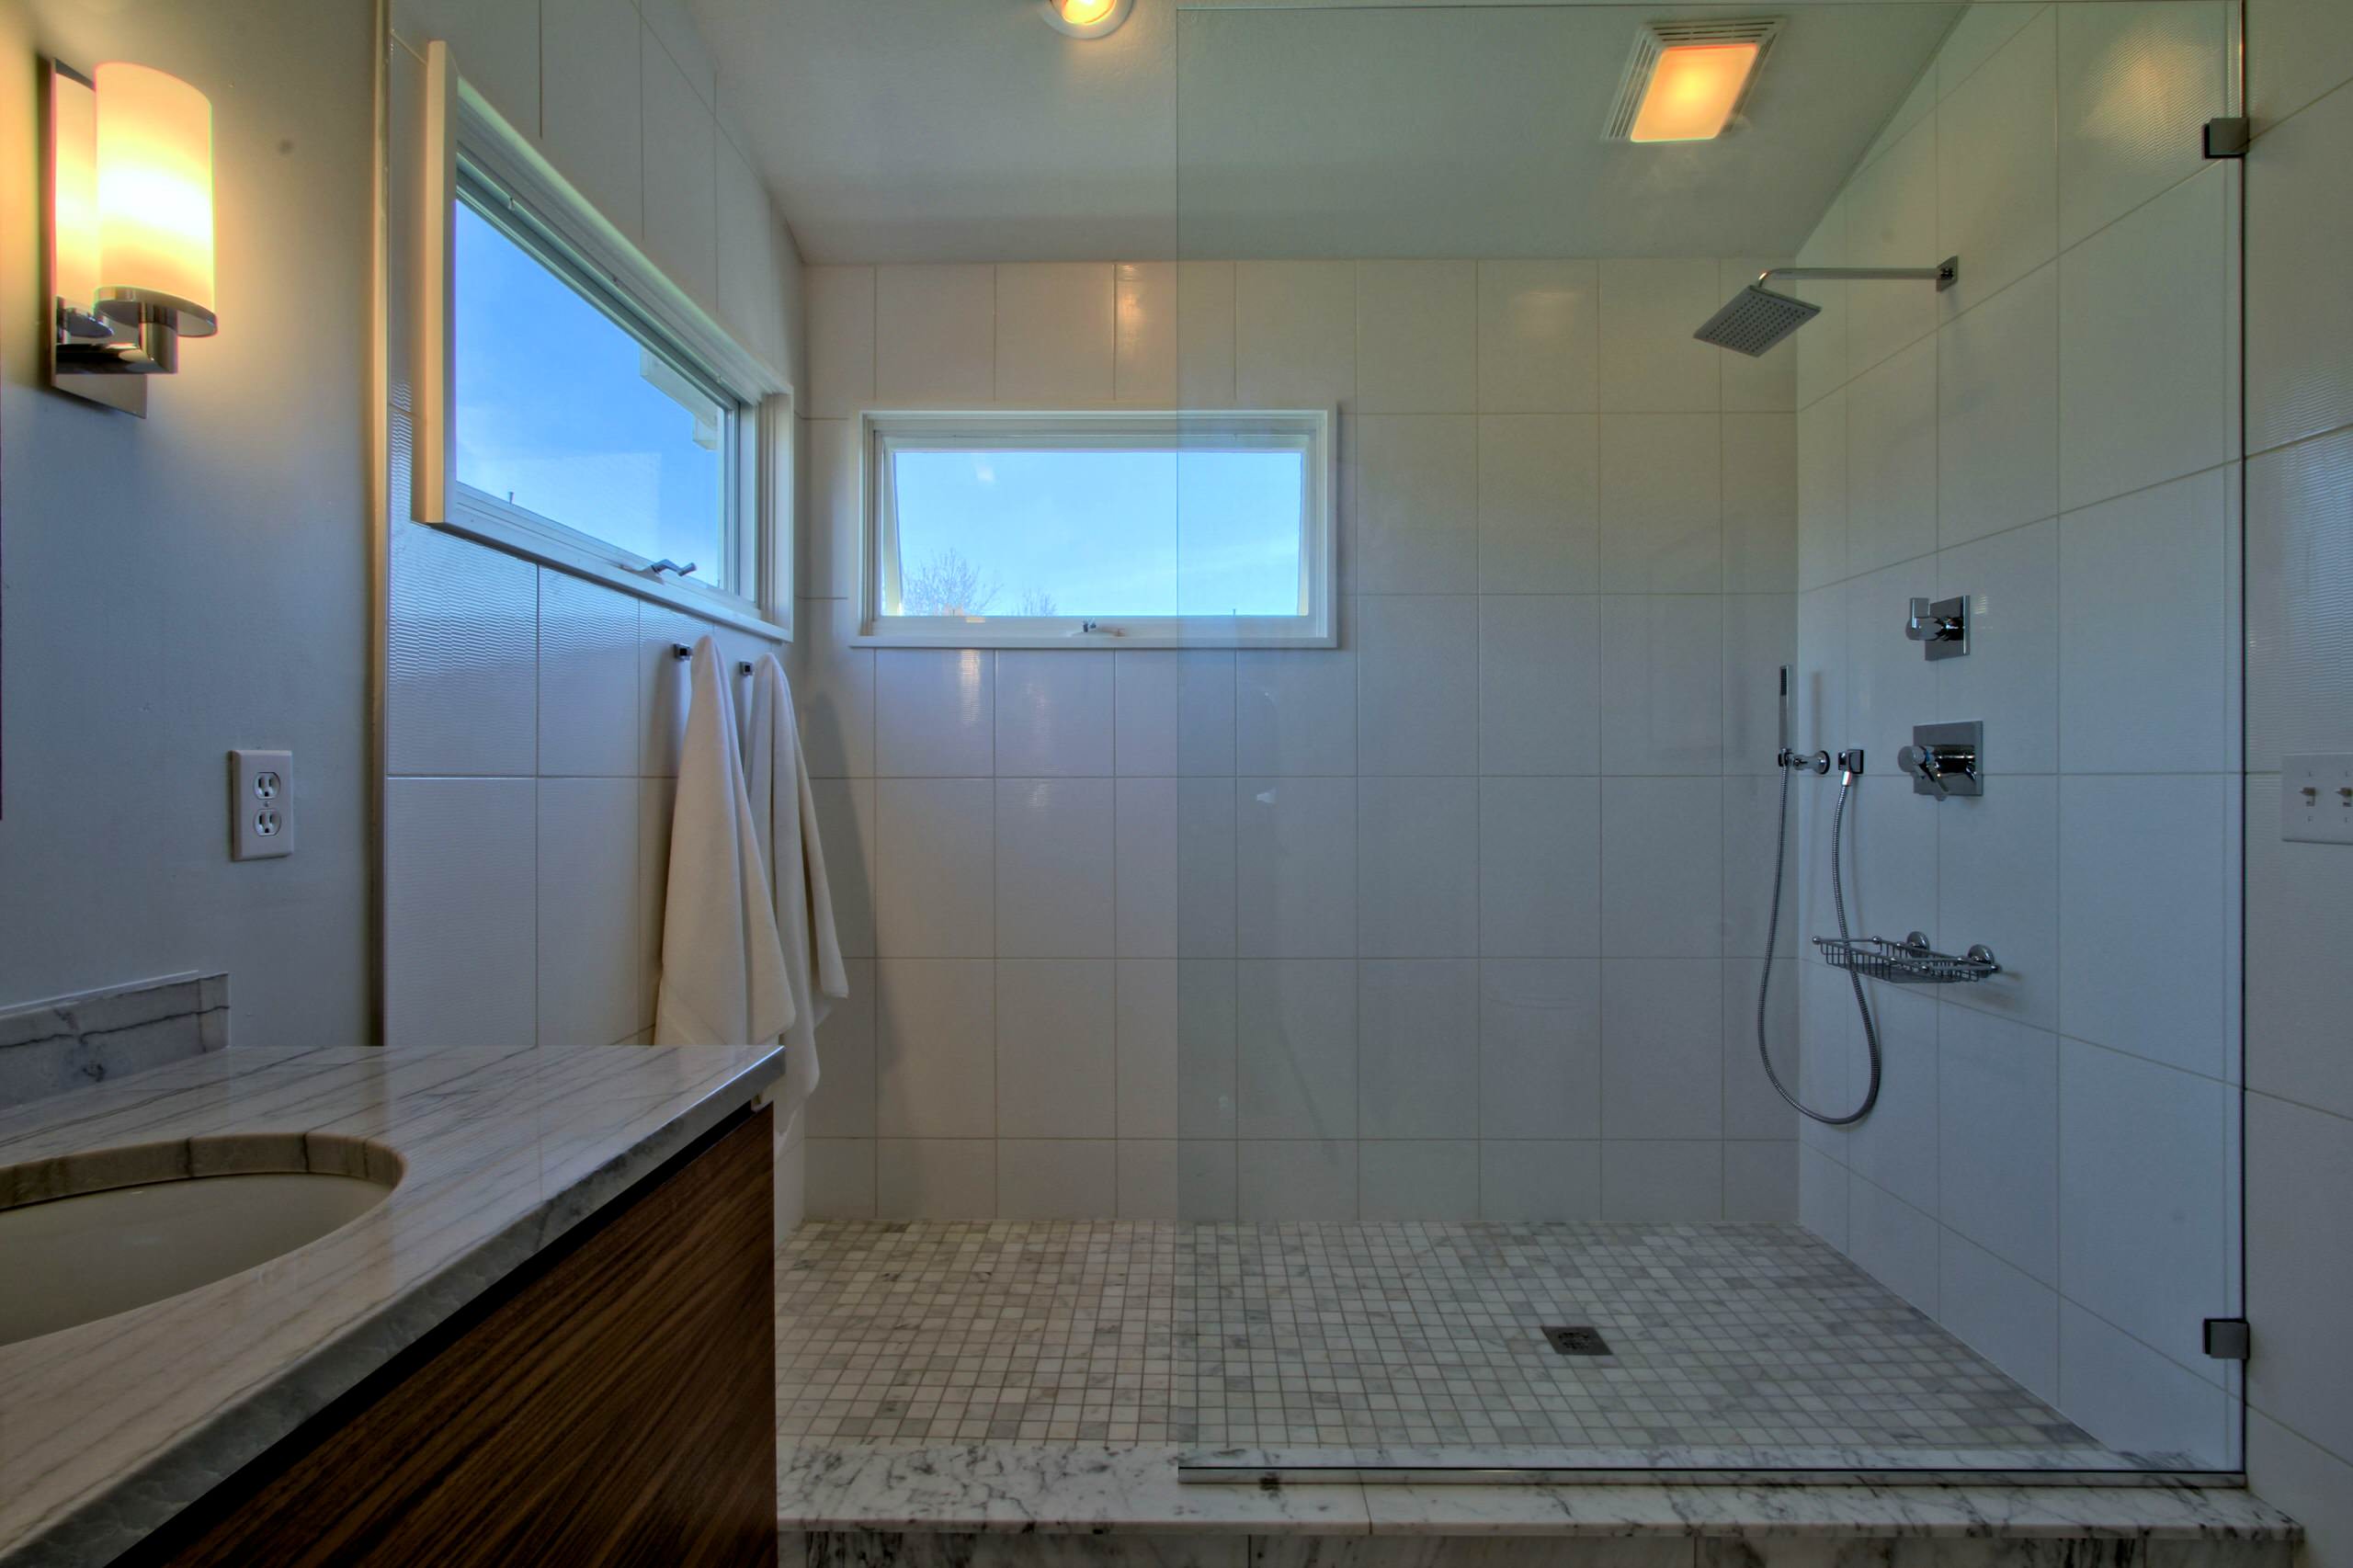 Window in shower, Bathroom windows in shower, Small bathroom window